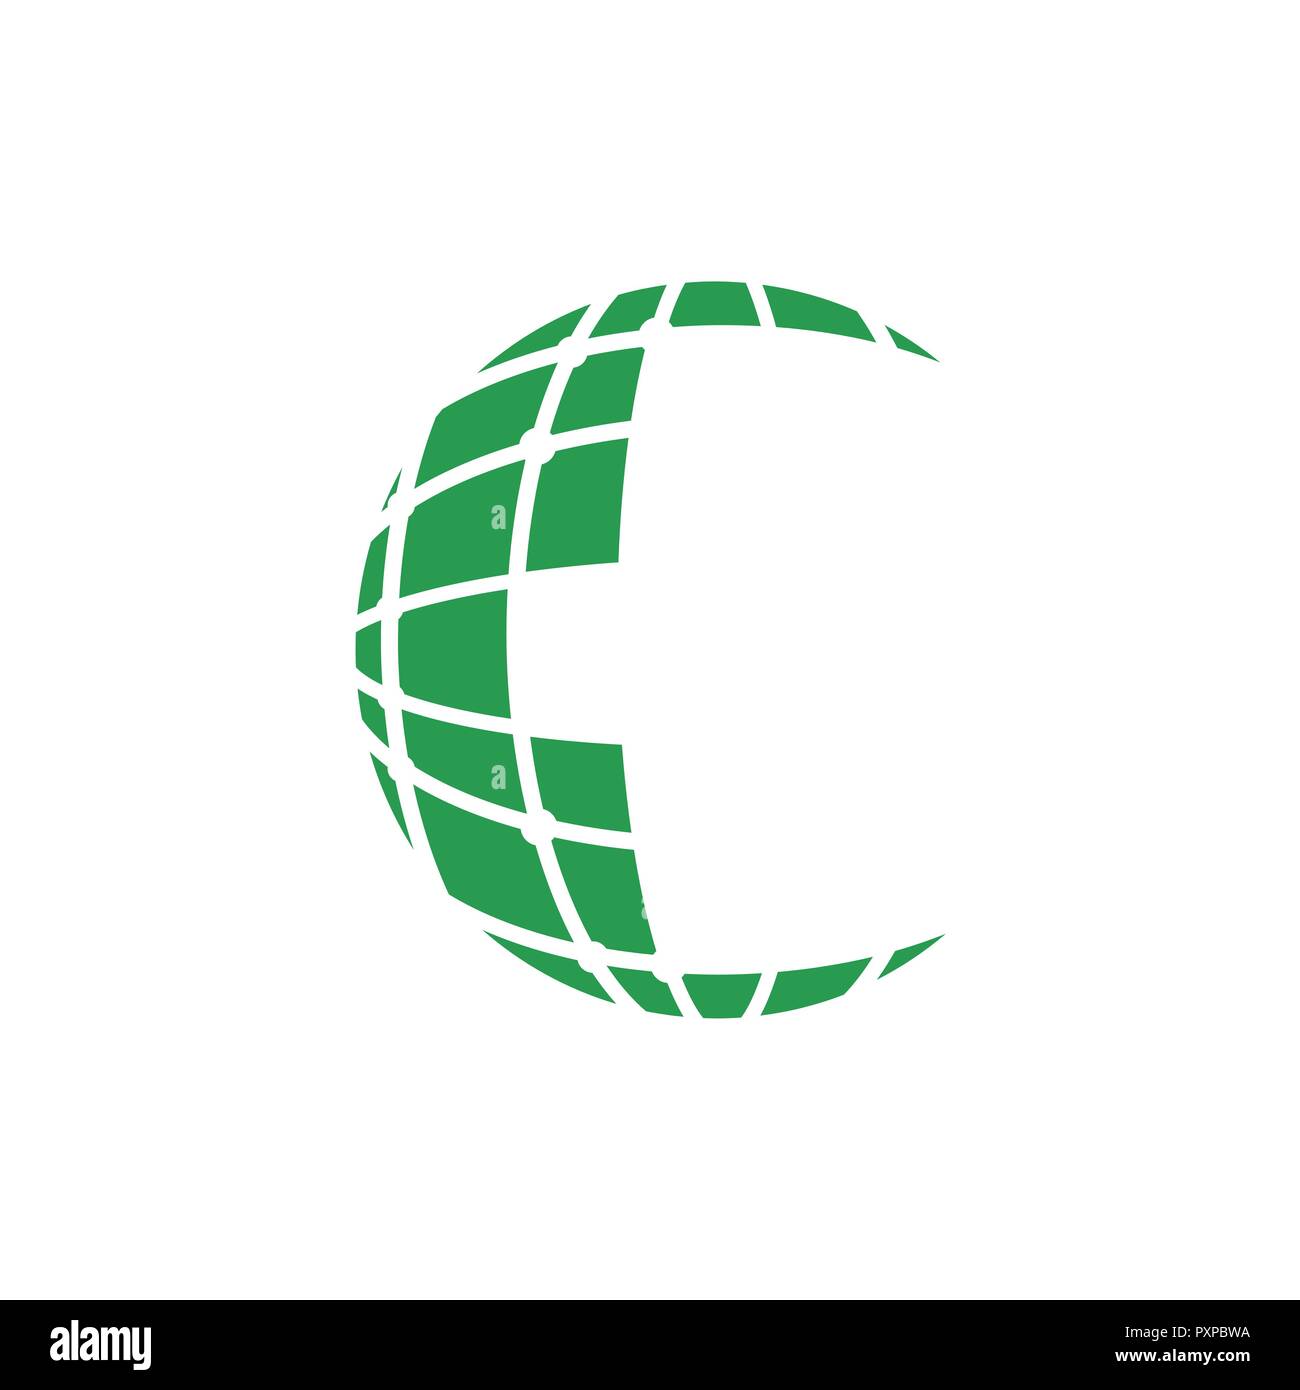 Digital Pixel Globe Logo Design Template in green color Stock Vector